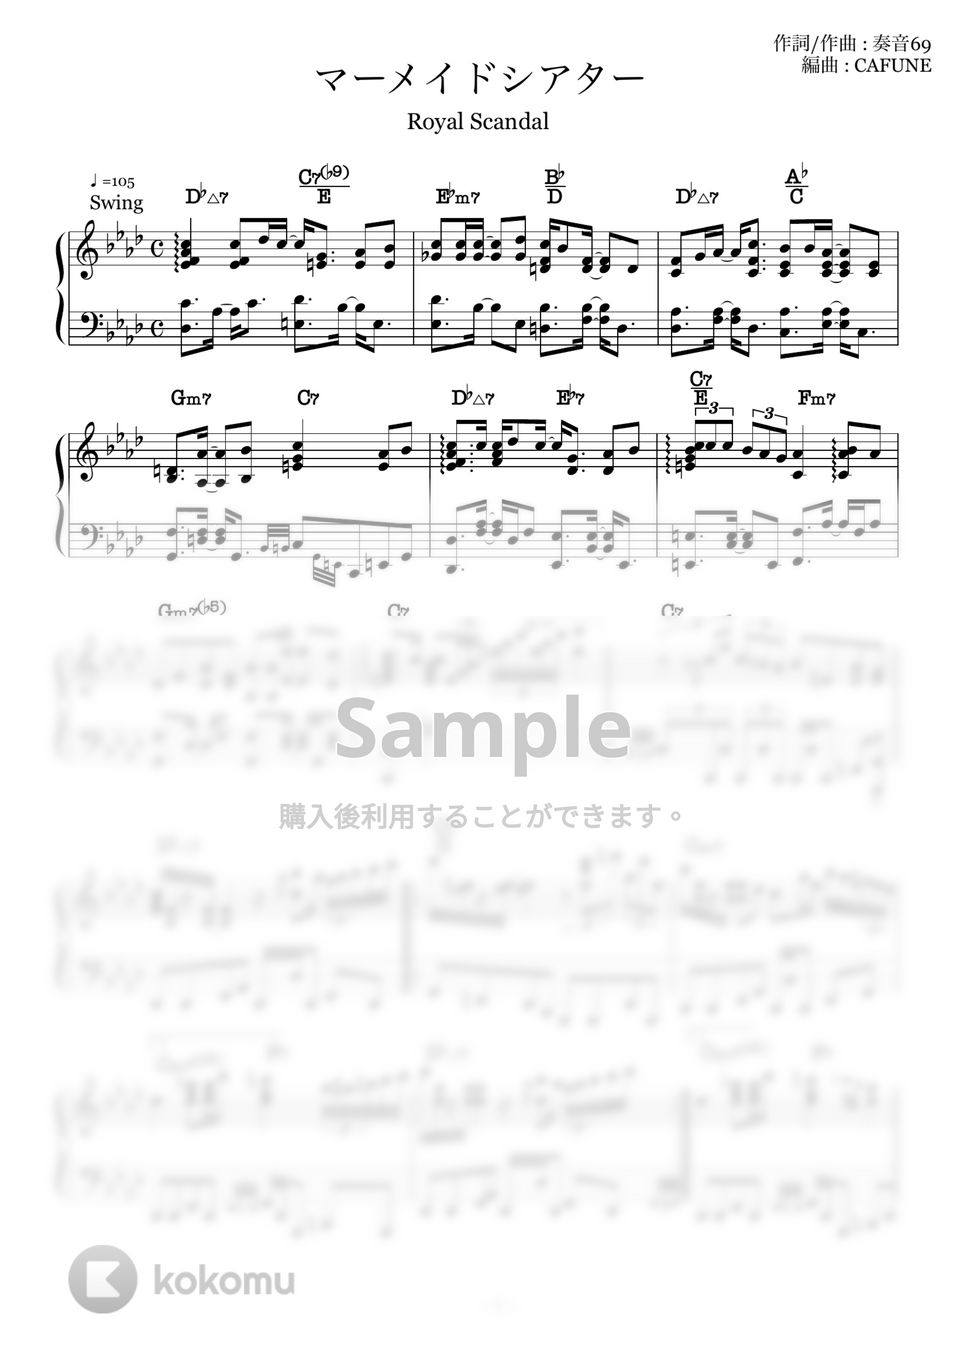 Royal Scandal - マーメイドシアター (ピアノソロ/コード有/奏音69/royalscandal) by CAFUNE-かふね-